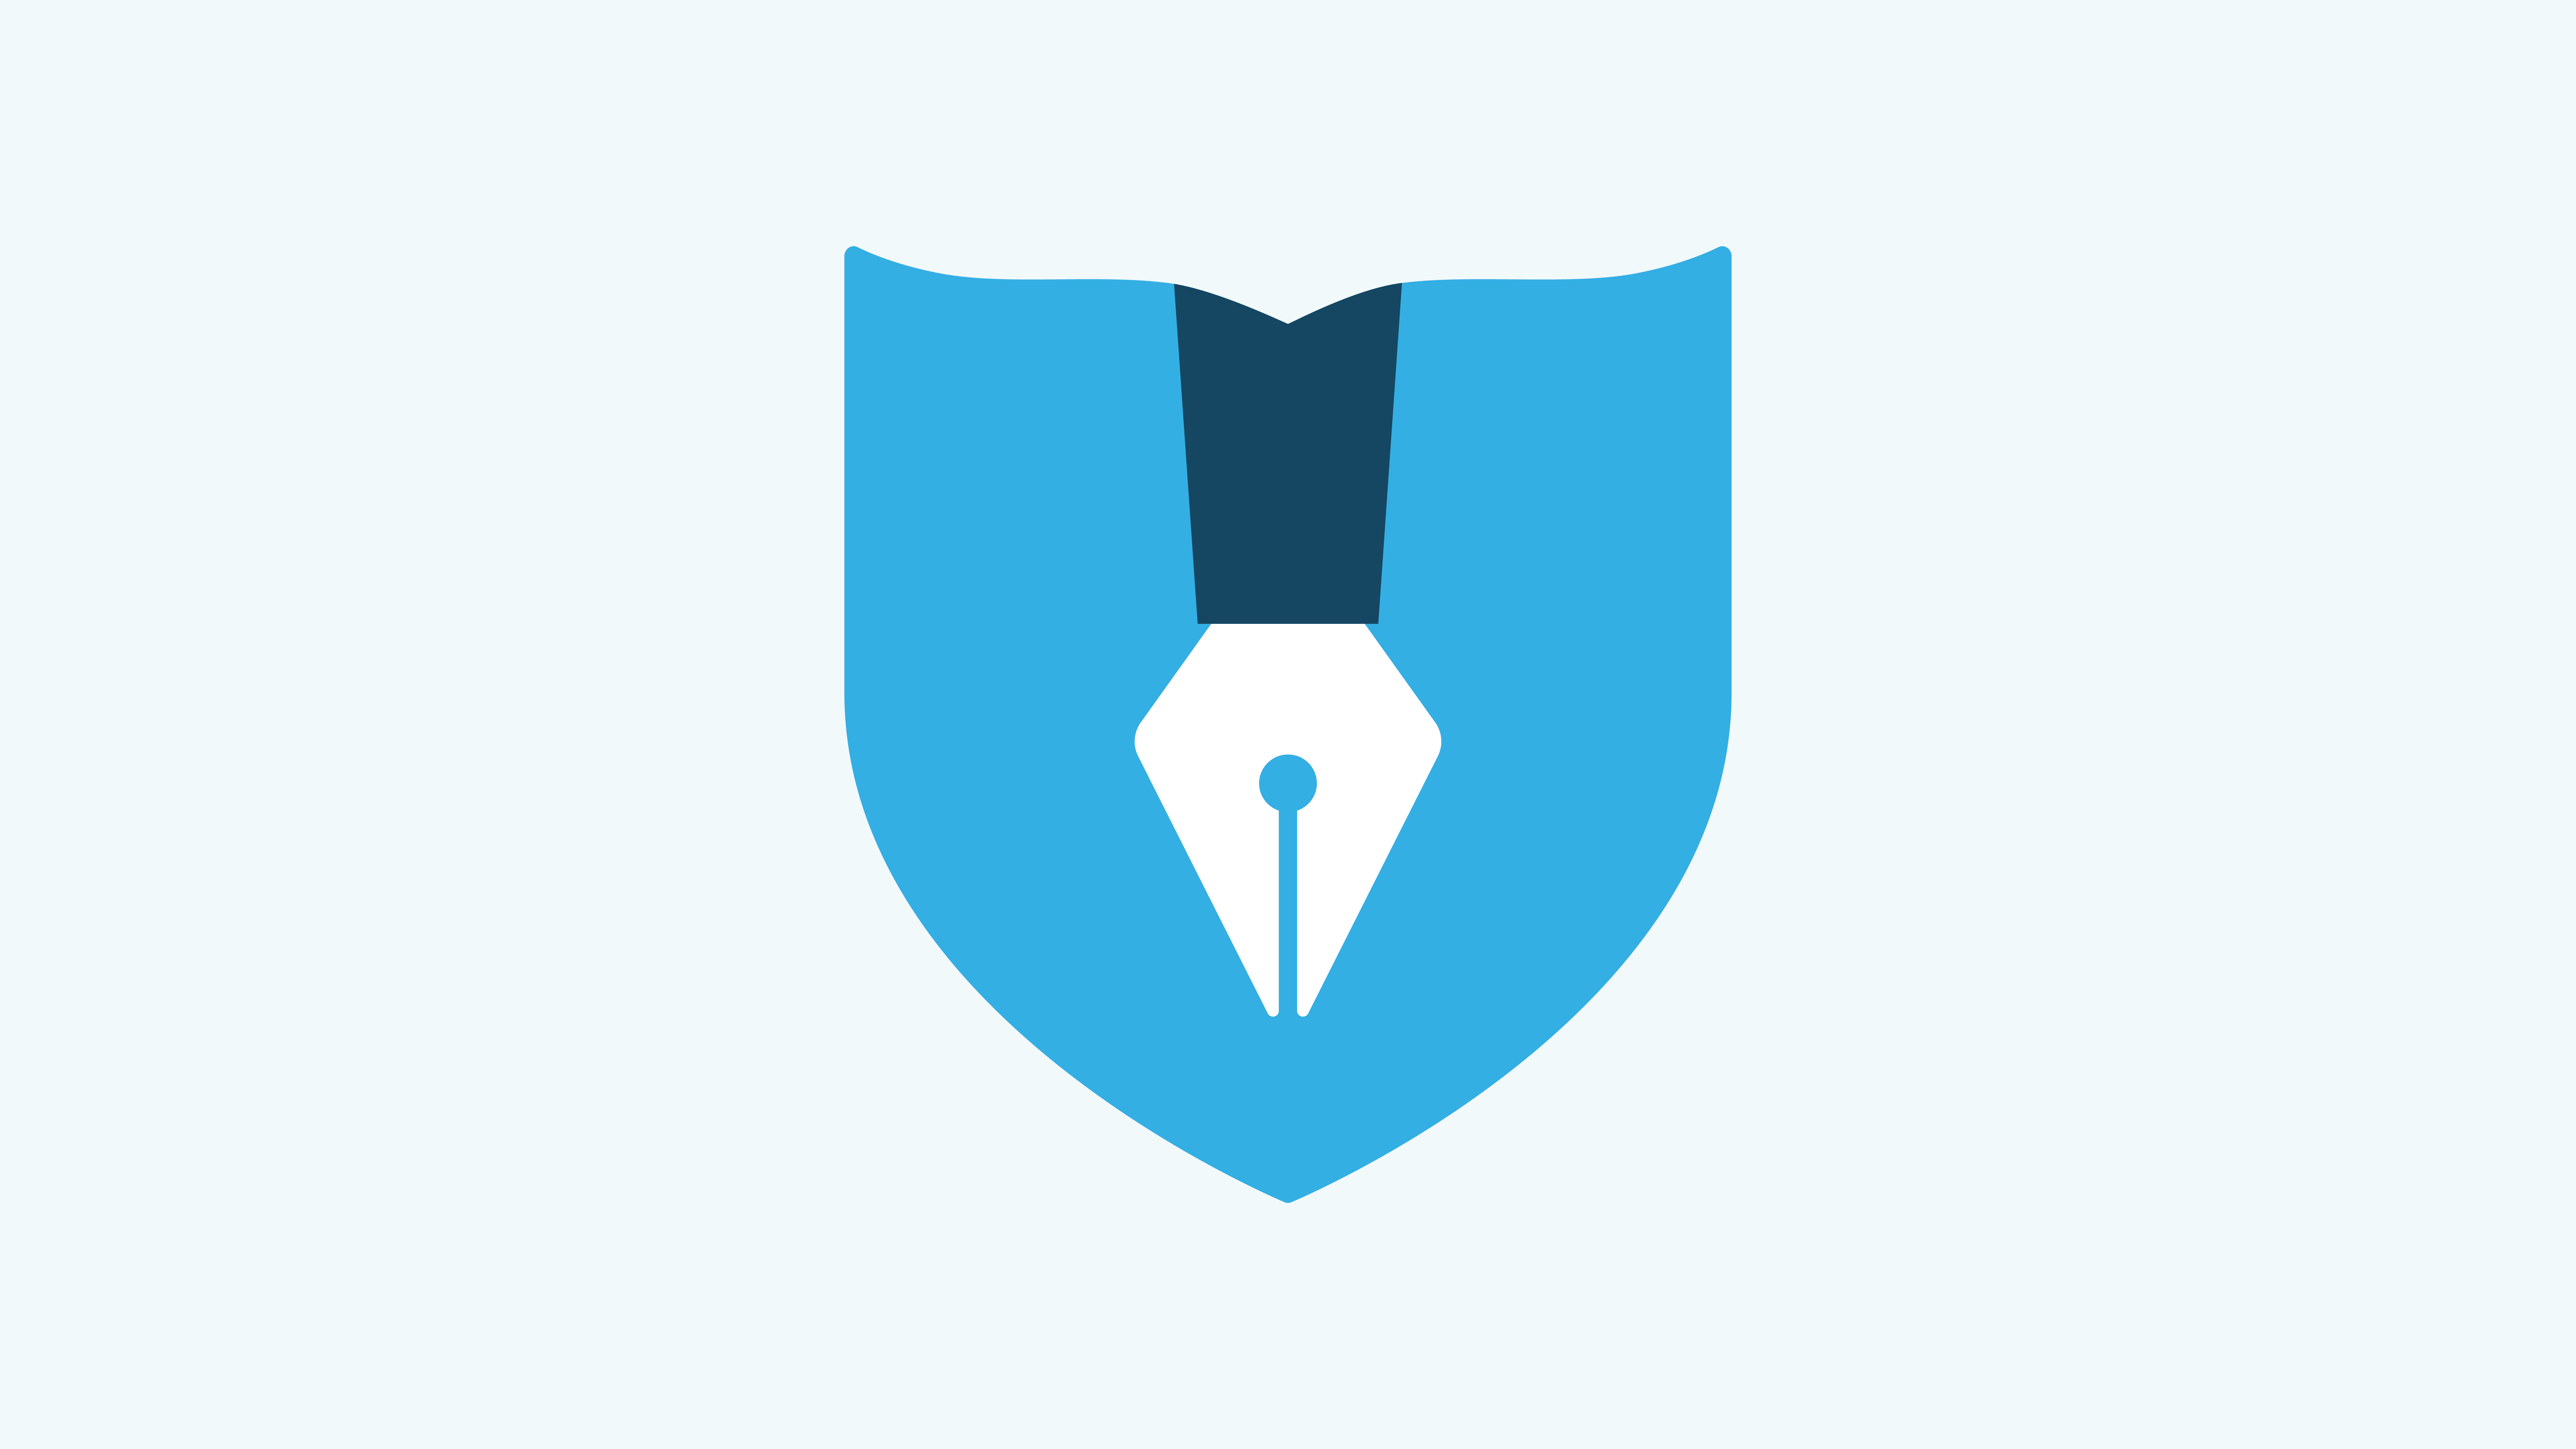 a pen on a bright blue shield over a gray field